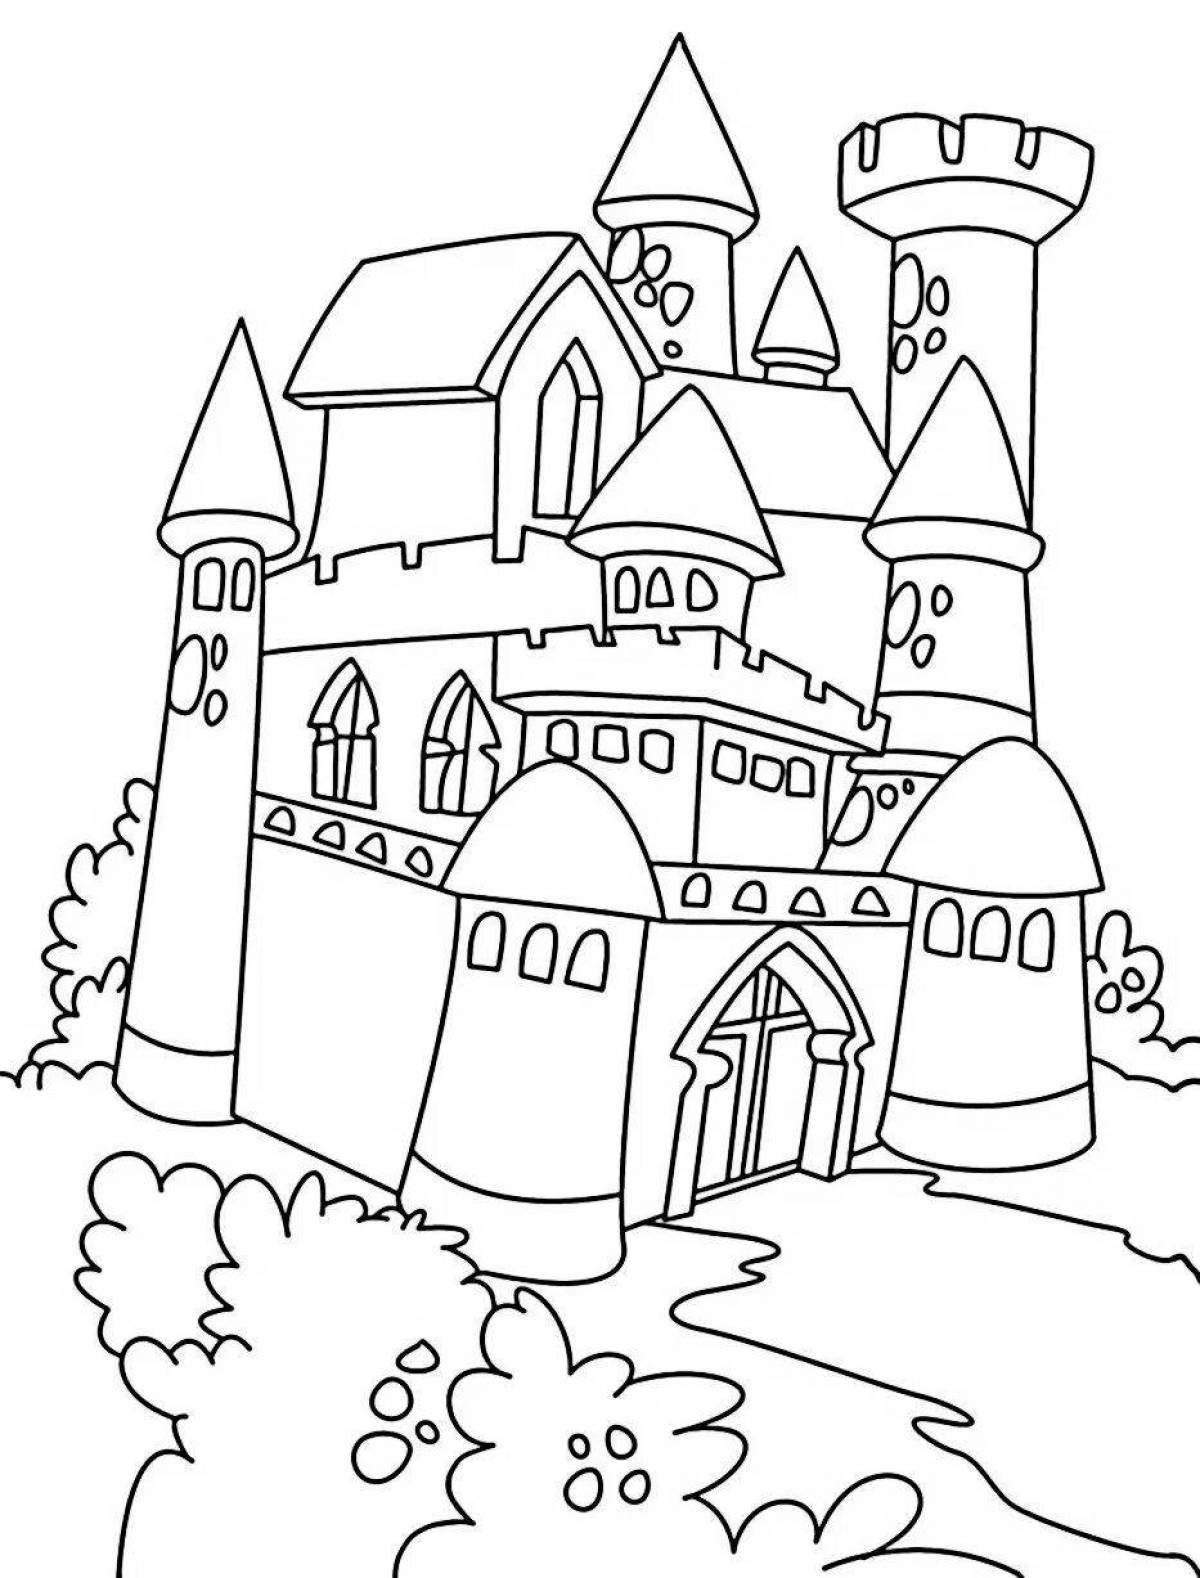 Coloring page magic fairytale castle